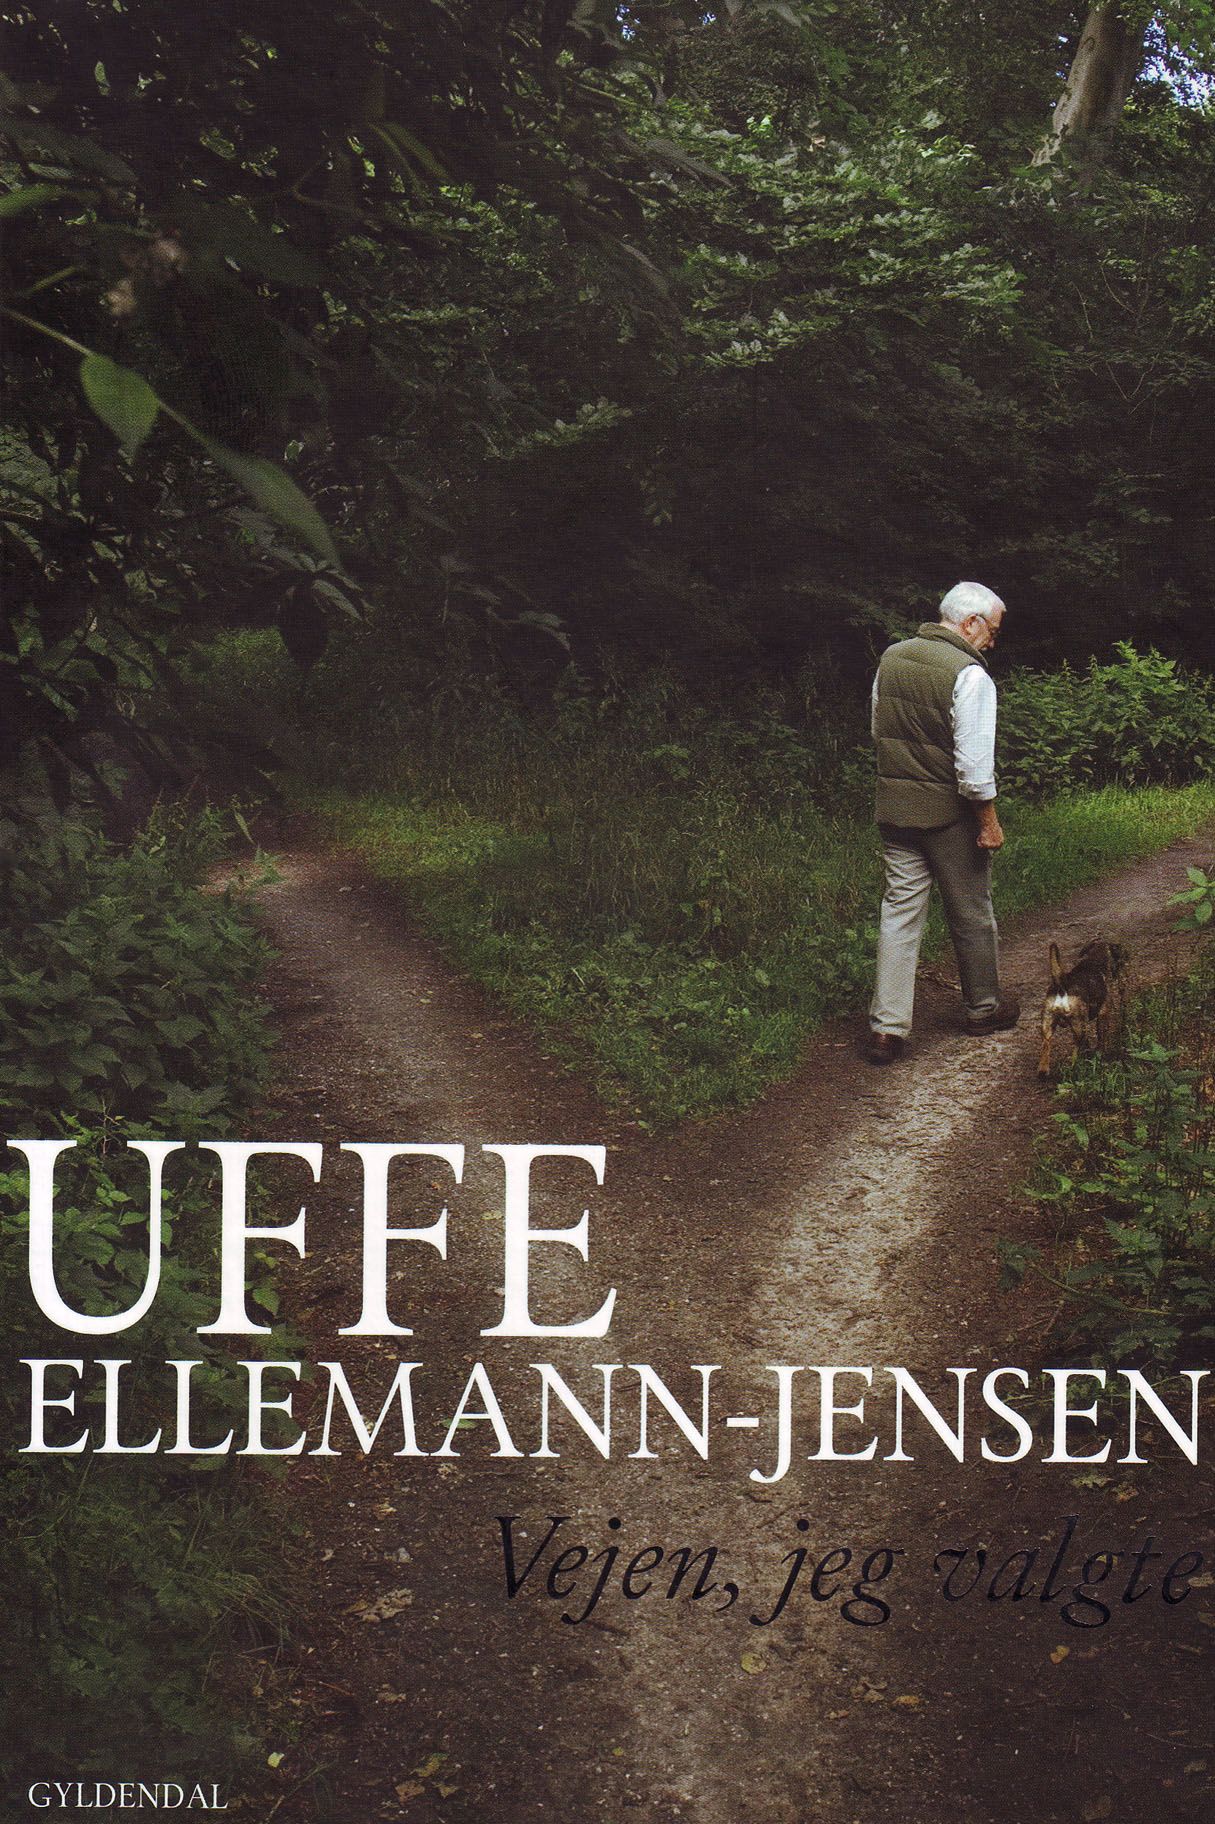 Vejen, jeg valgte, eBook by Uffe Ellemann-Jensen